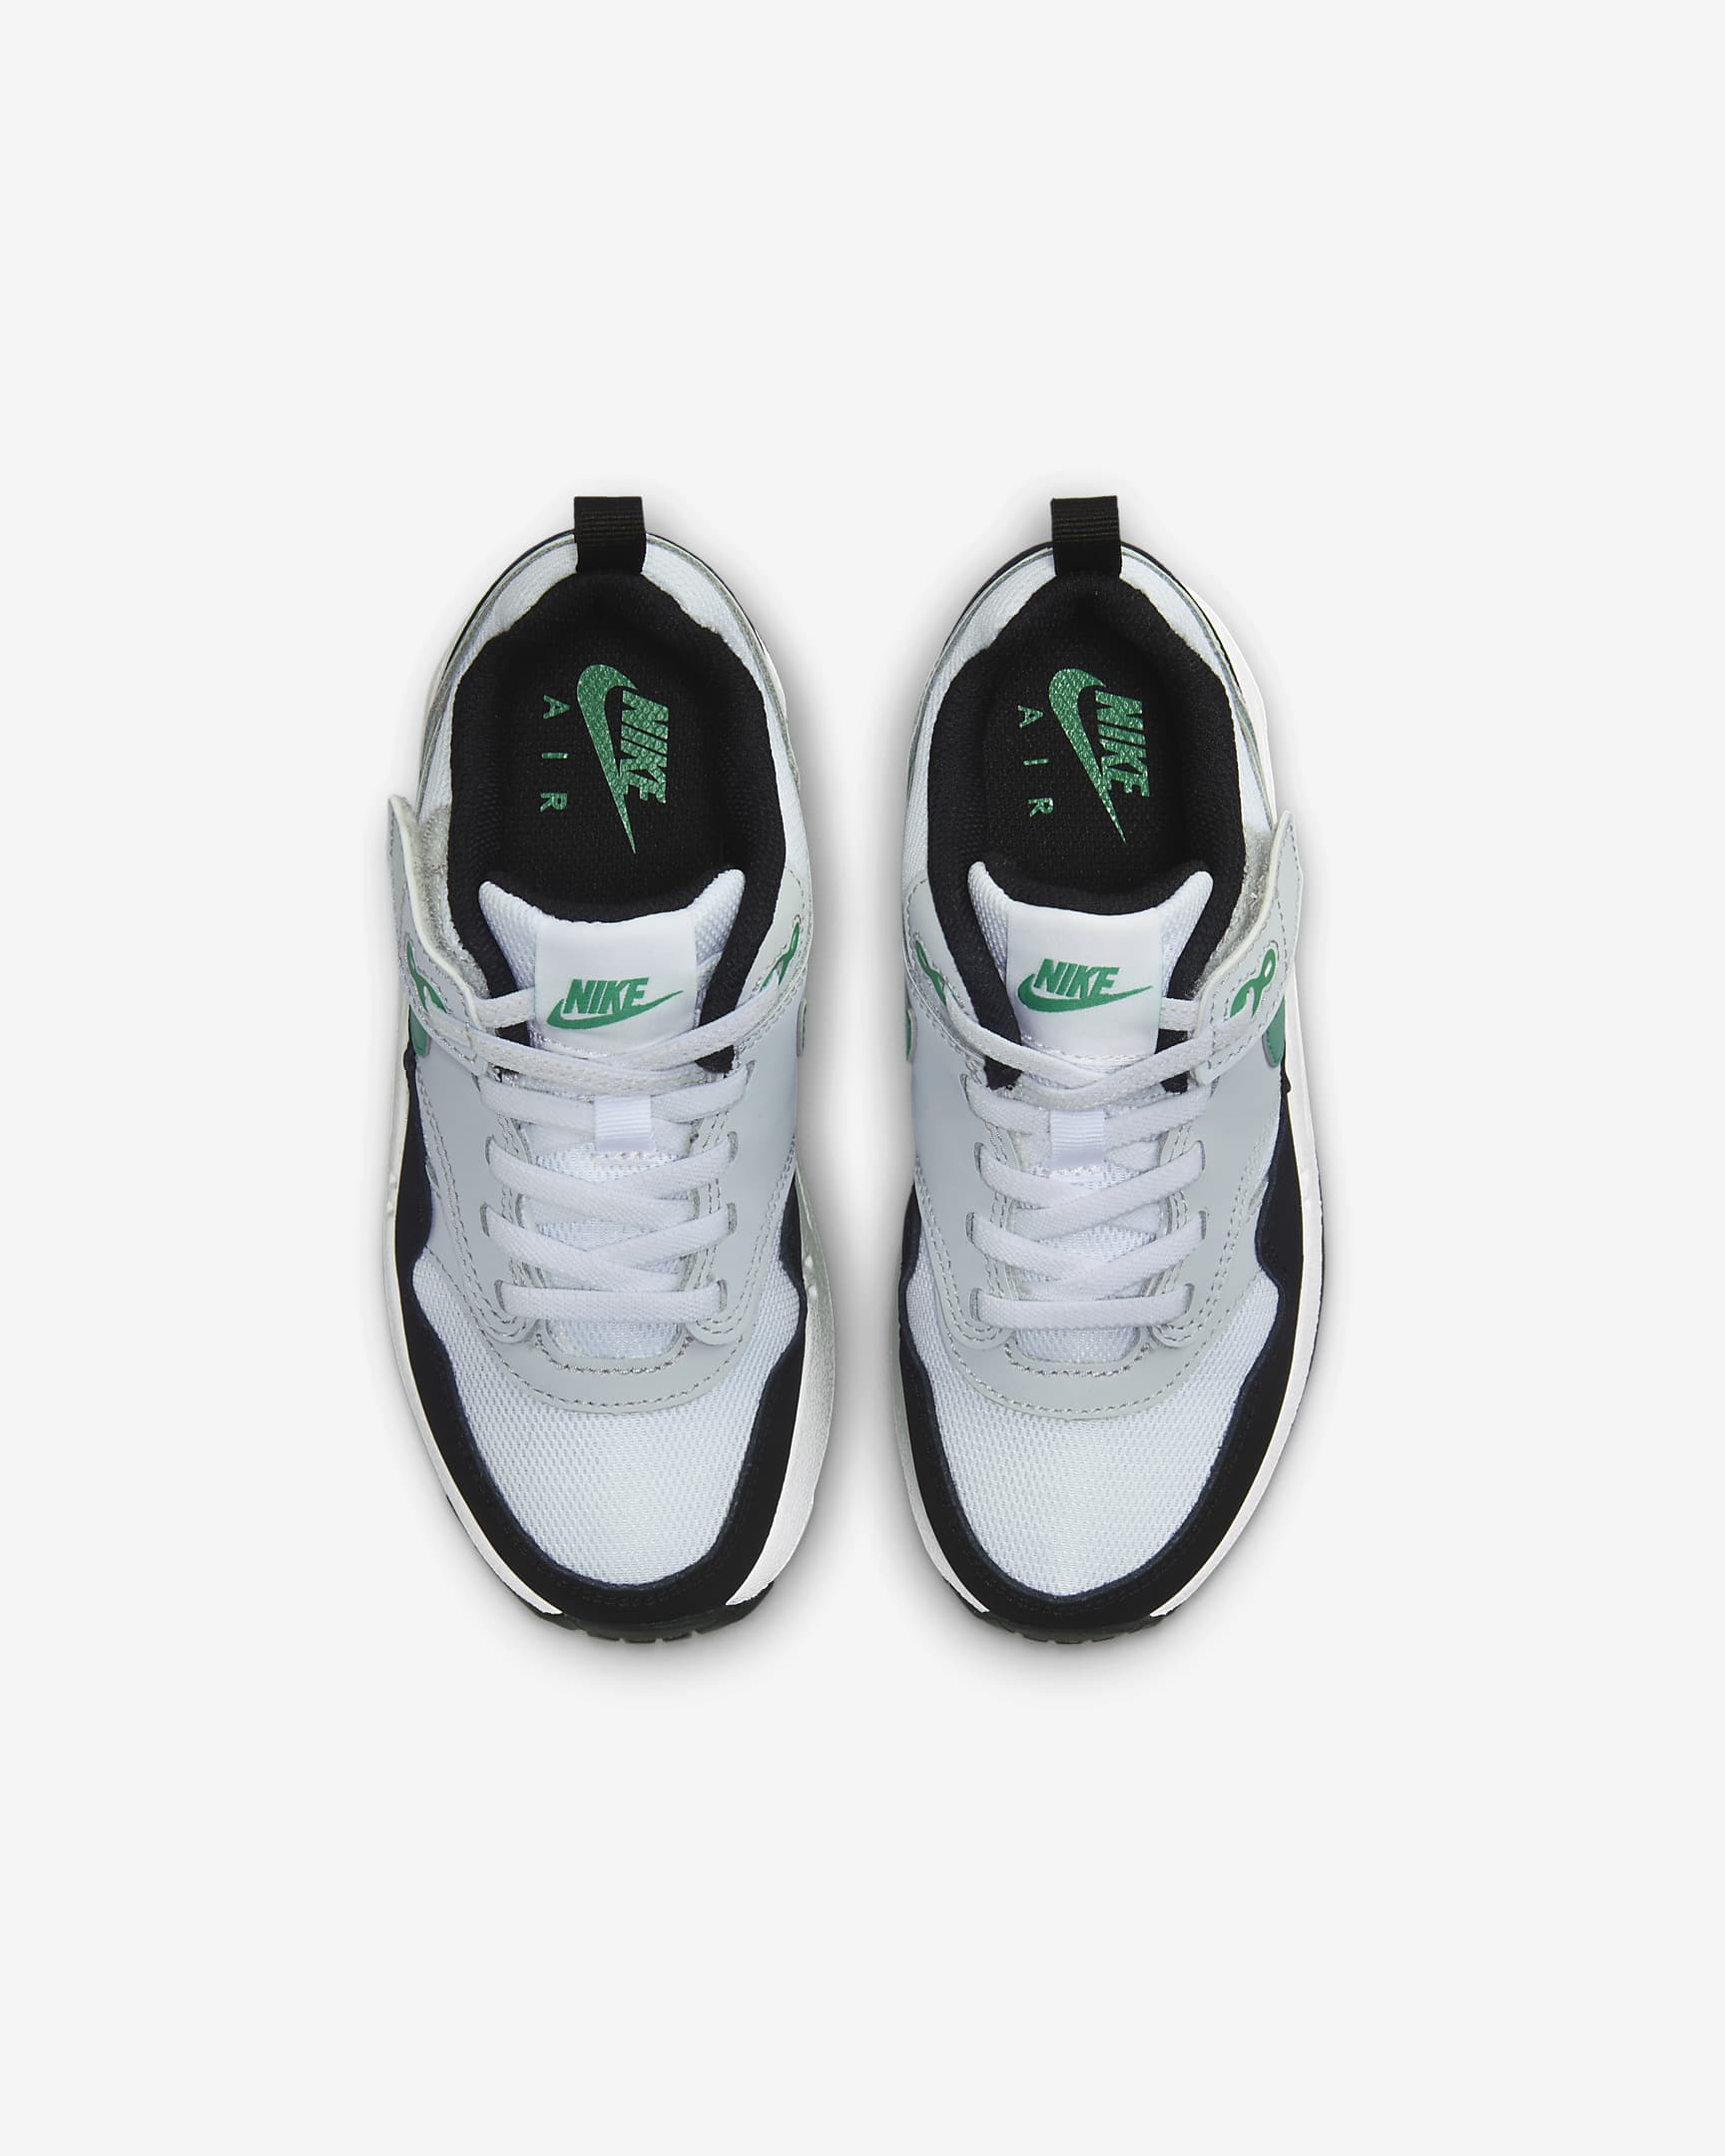 Chaussure Nike Air Max 1 EasyOn pour enfant - Blanc/Pure Platinum/Noir/Stadium Green